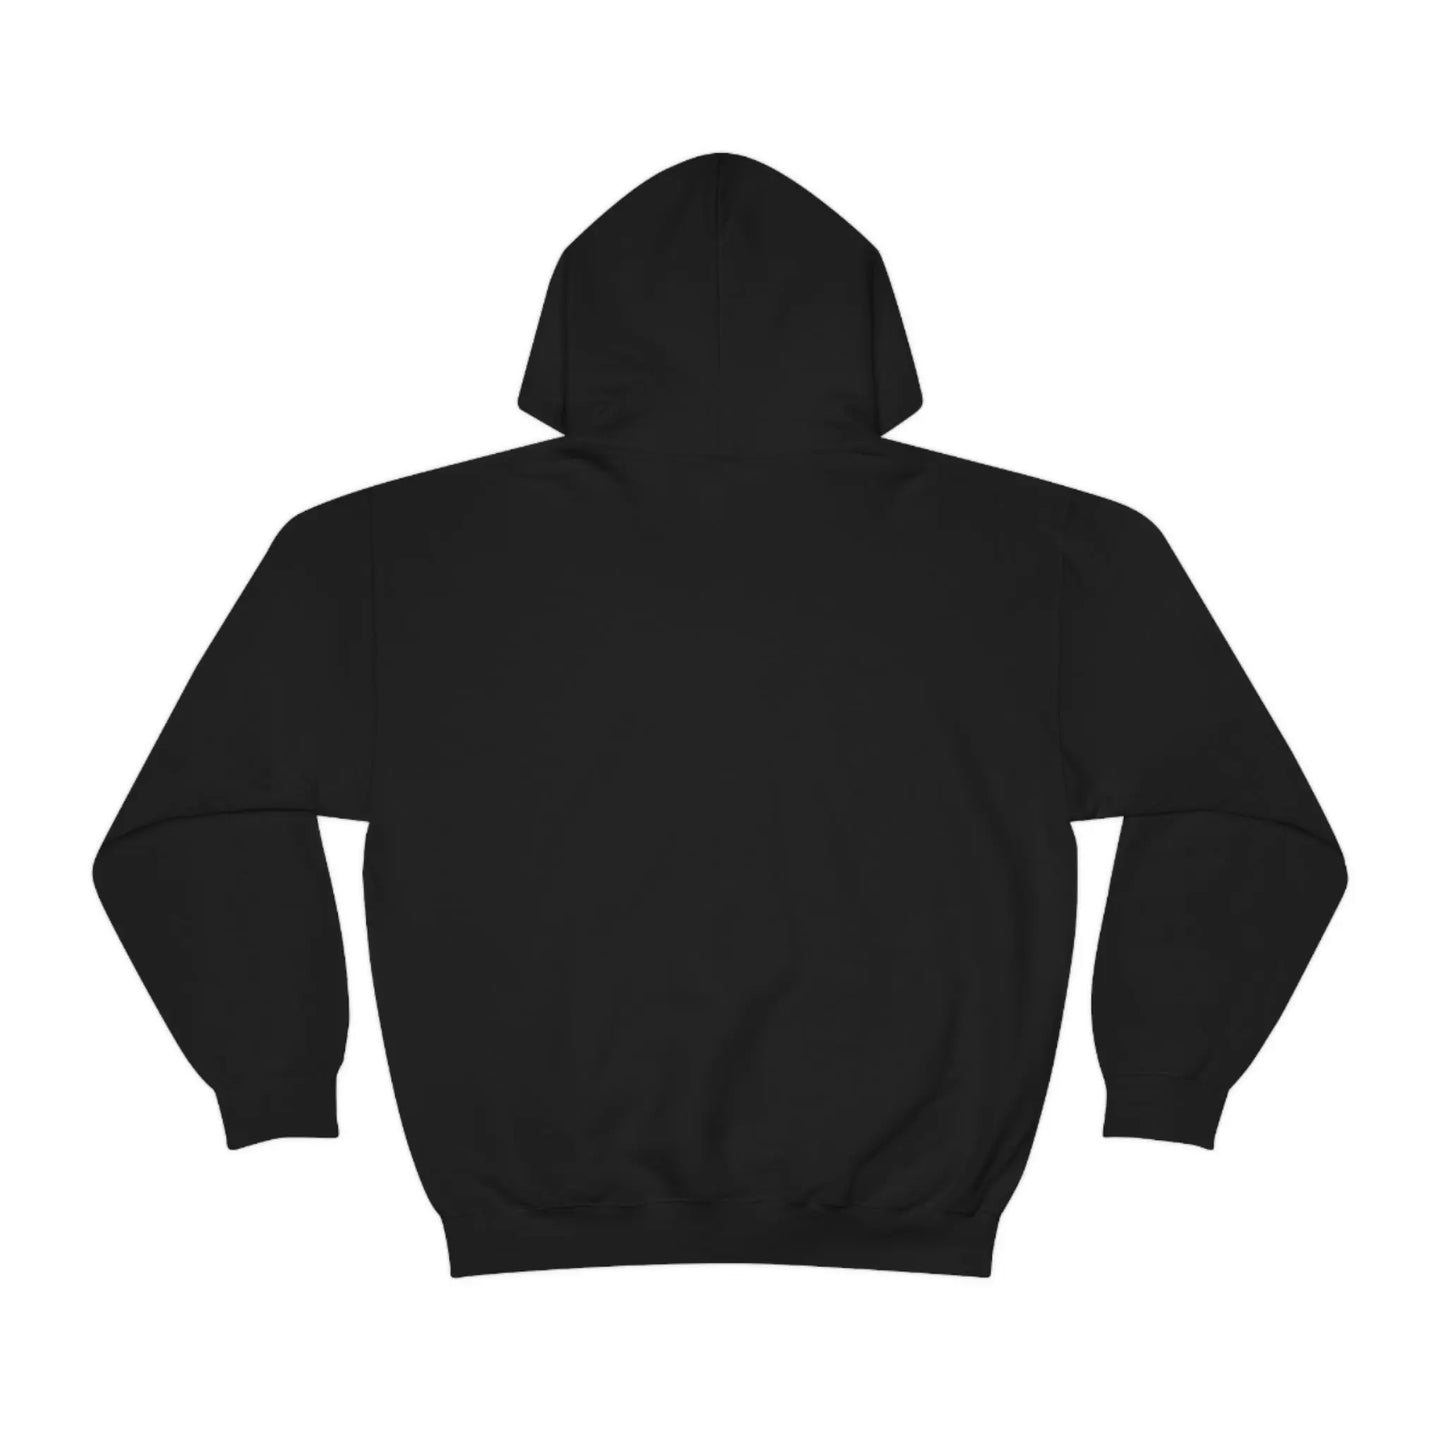 Retro “stay tomorrow needs you” Unisex Heavy Blend™ Hooded Sweatshirt - papercraneco